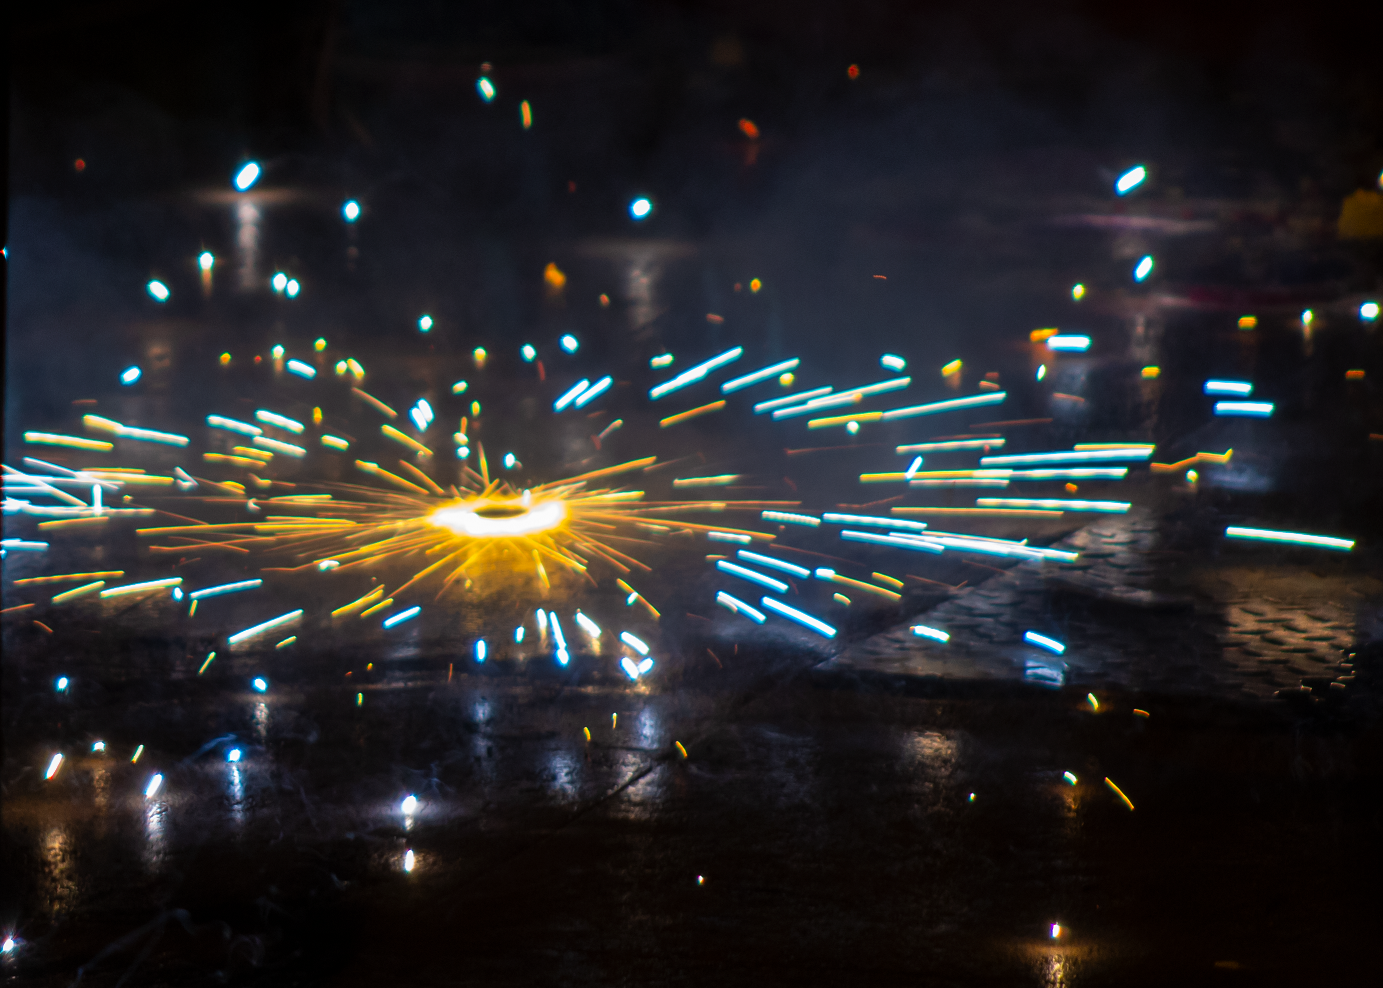  Diwali: The Festival of Lights